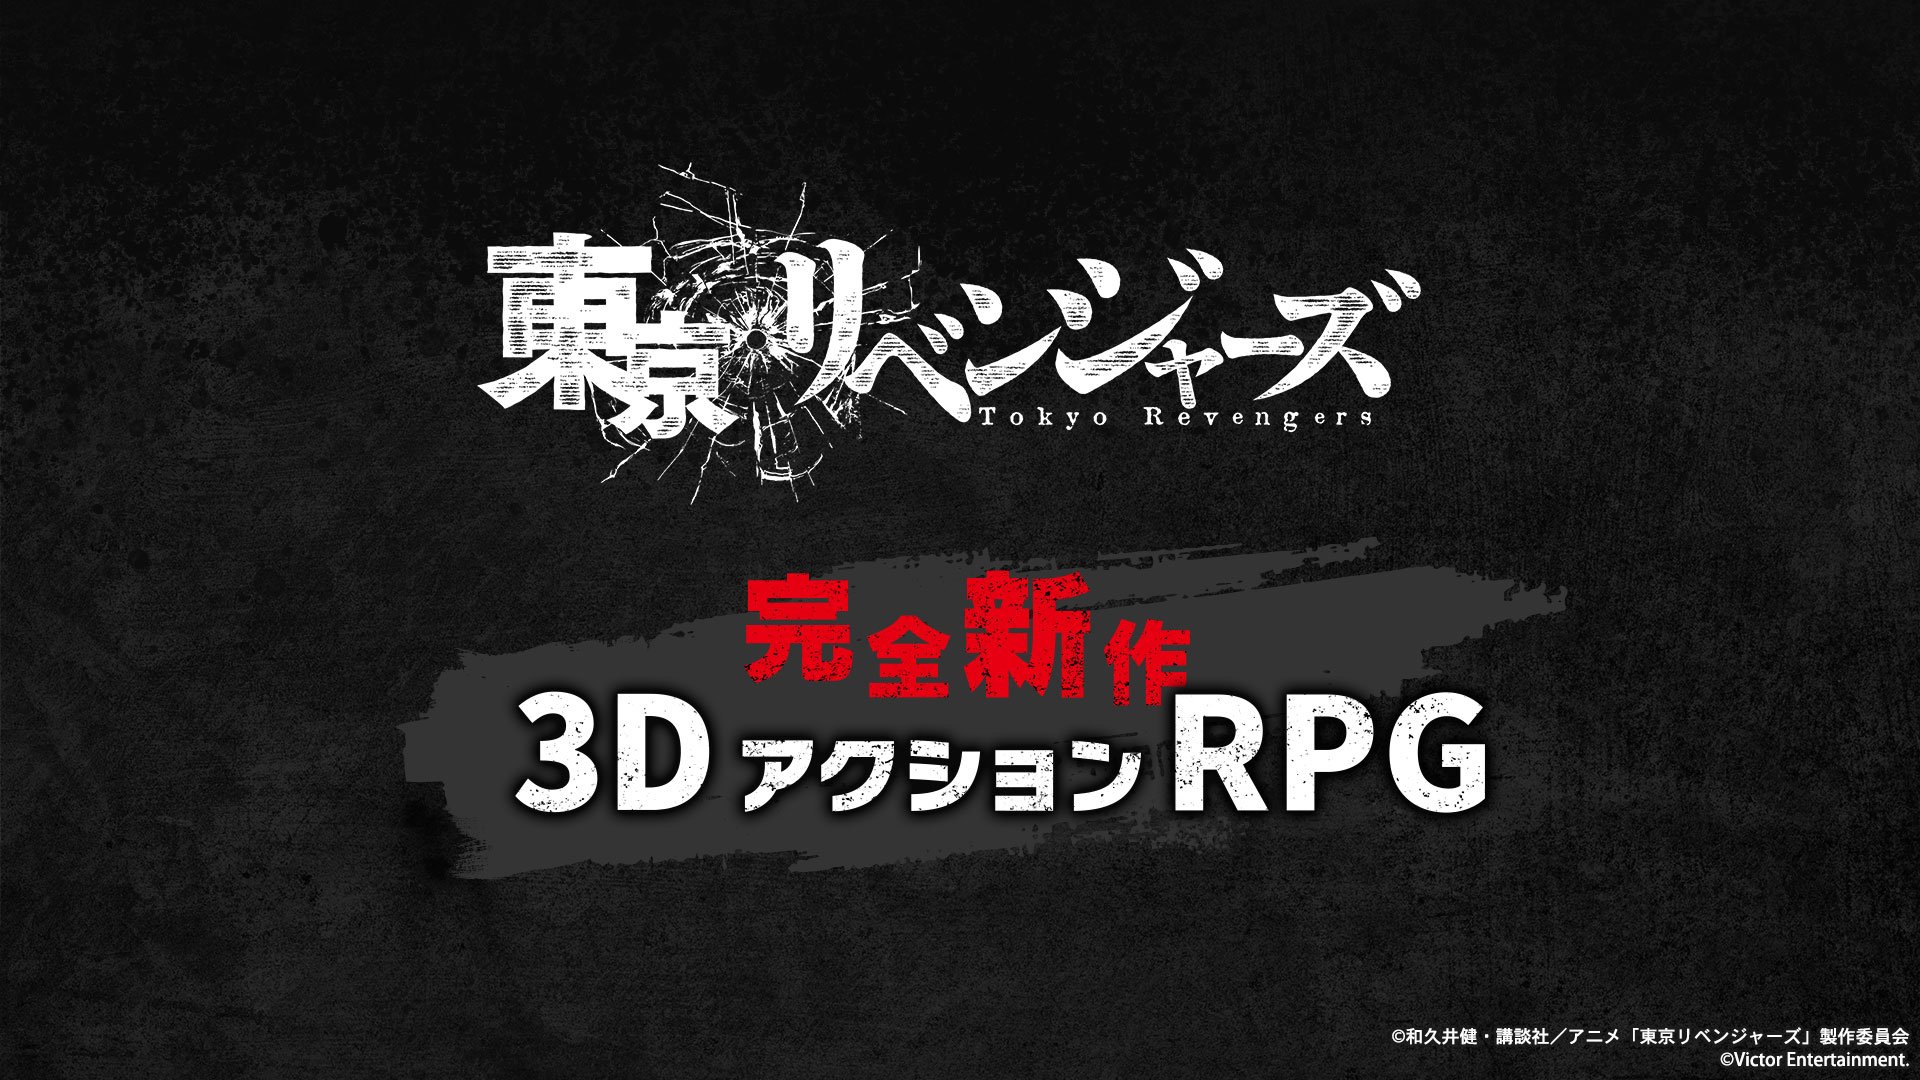 Tokyo Revengers' Announces Release Date for Season 2